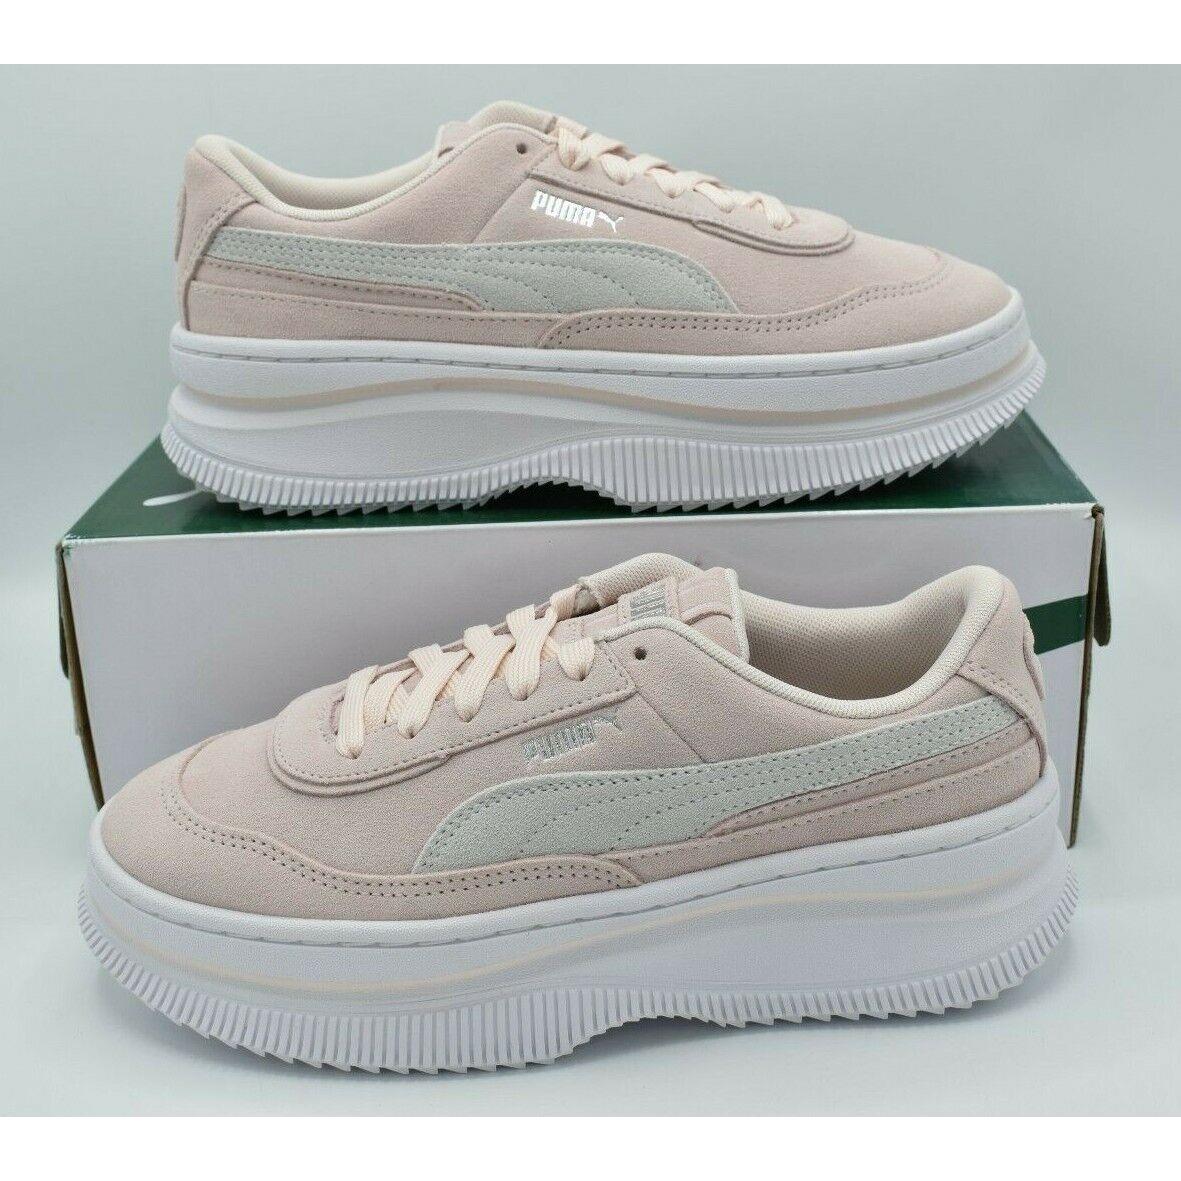 Puma Womens Size 7.5 Deva Suede Casual Pink White Platform Shoes Sneakers